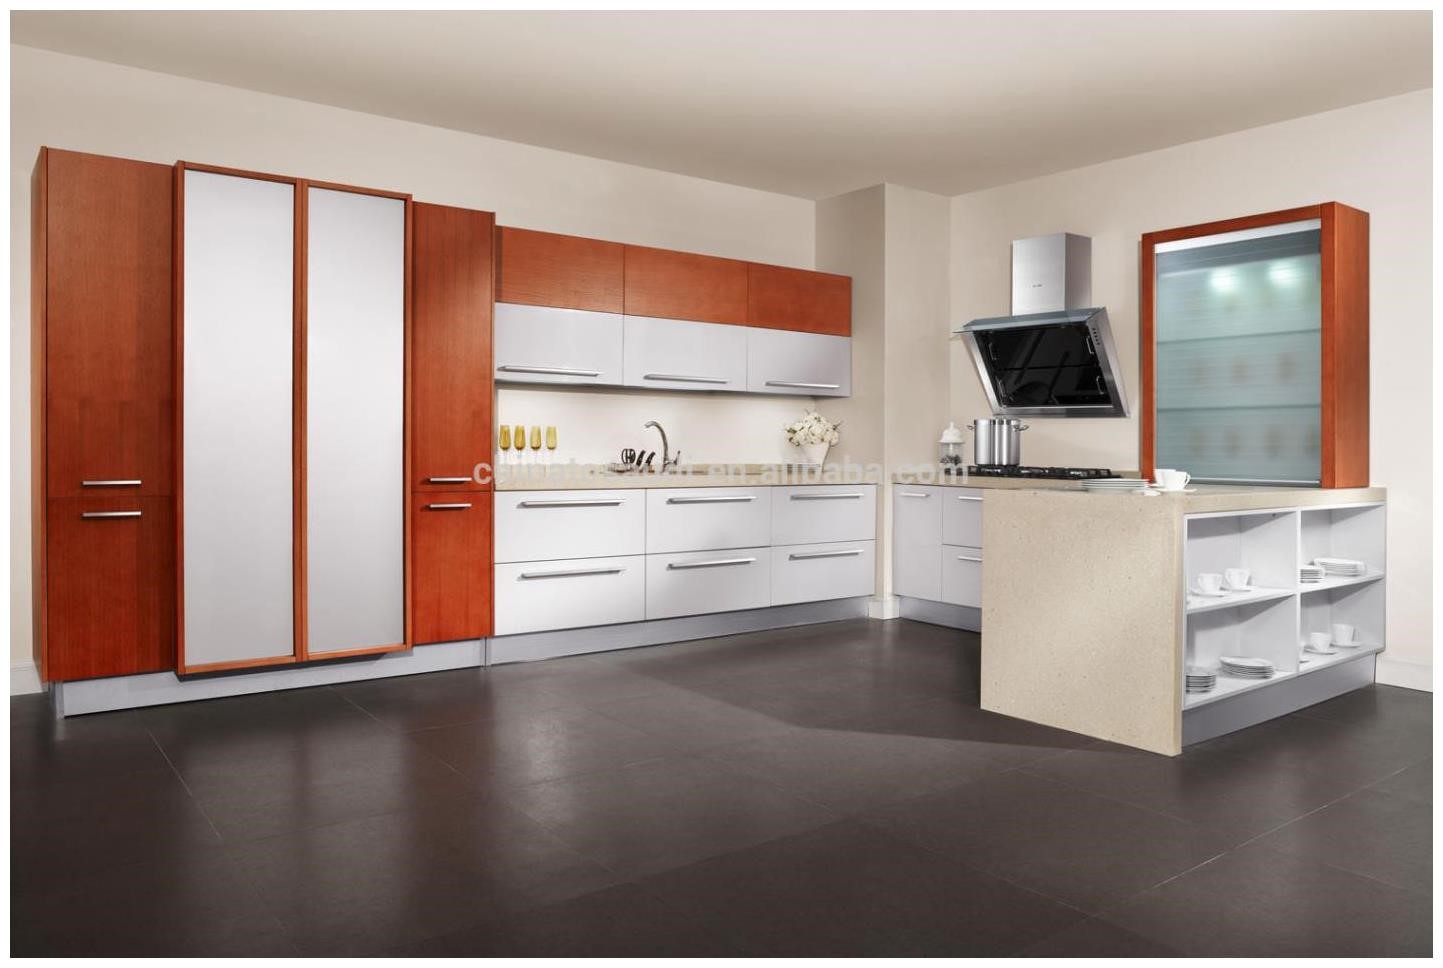 16 New Design Of Modular Kitchen Turkey Acrylic Custom Kitchen Cabinet For Sale New,Design,Of,Modular,Kitchen